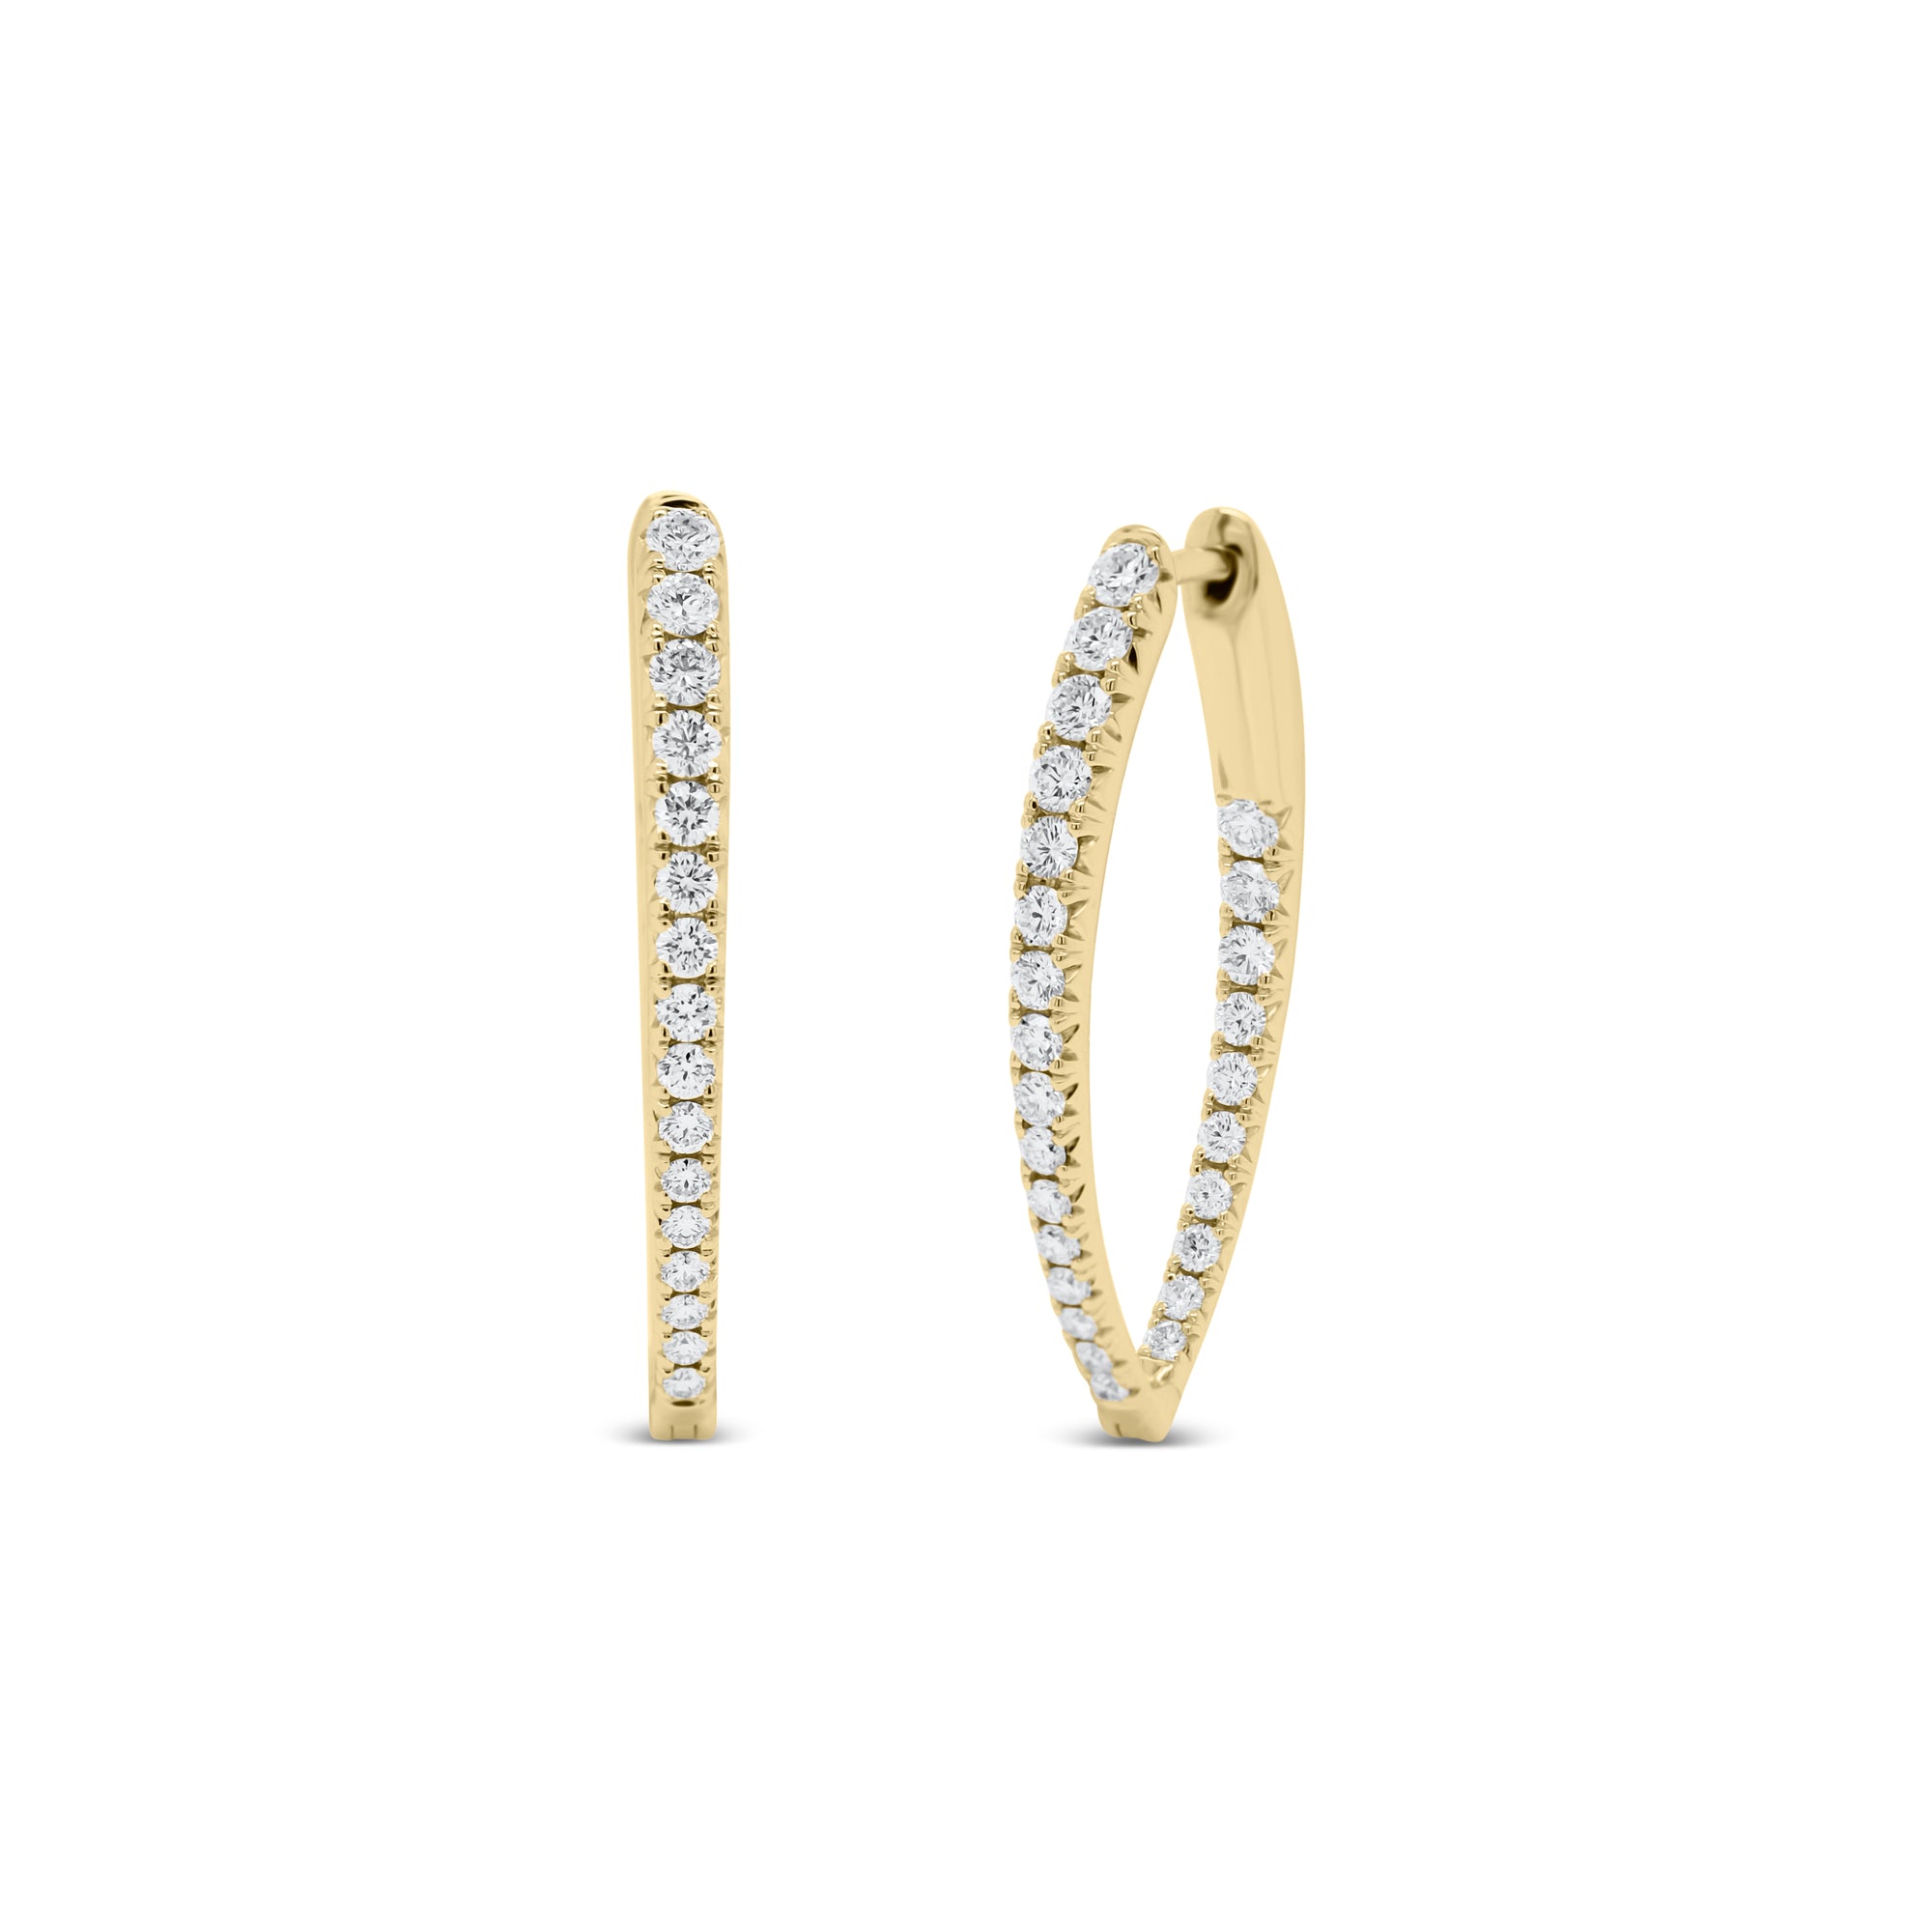 Diamond Interior Exterior Hoop Earrings - 18K gold weighing 6.53 grams  - 52 round diamonds totaling 1.21 carats